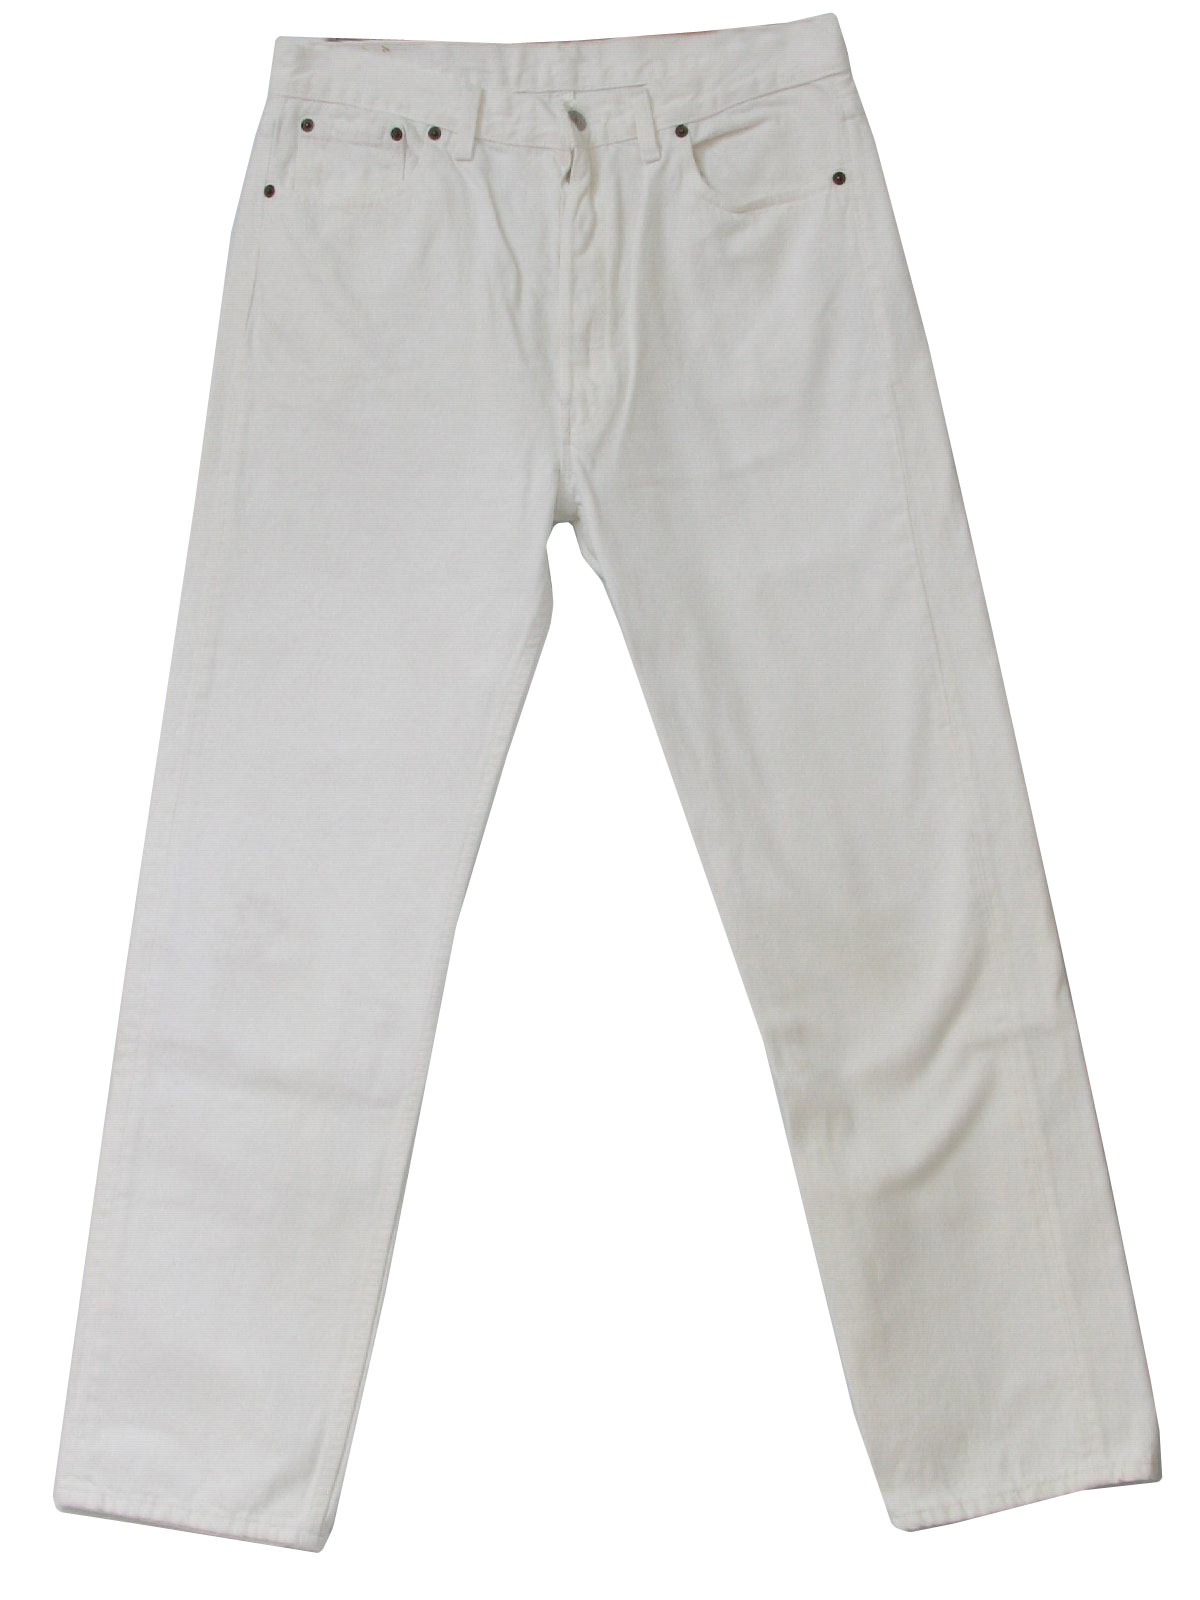 mens white levi 501 jeans